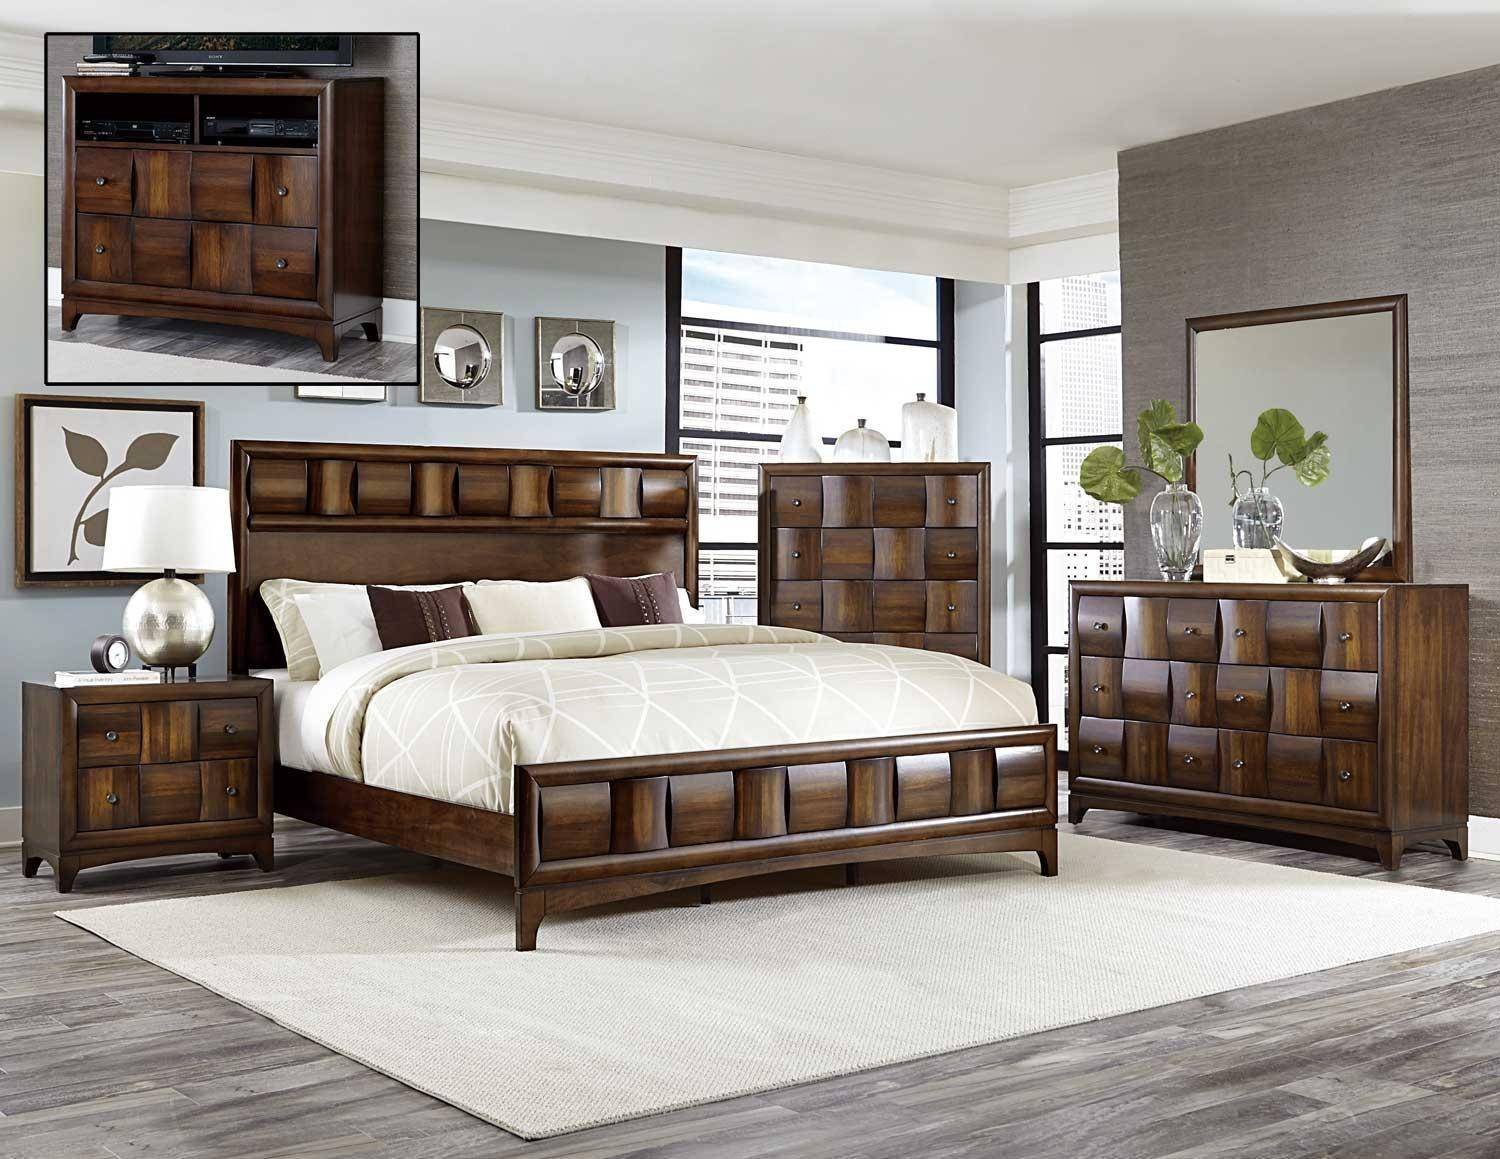 california style bedroom furniture